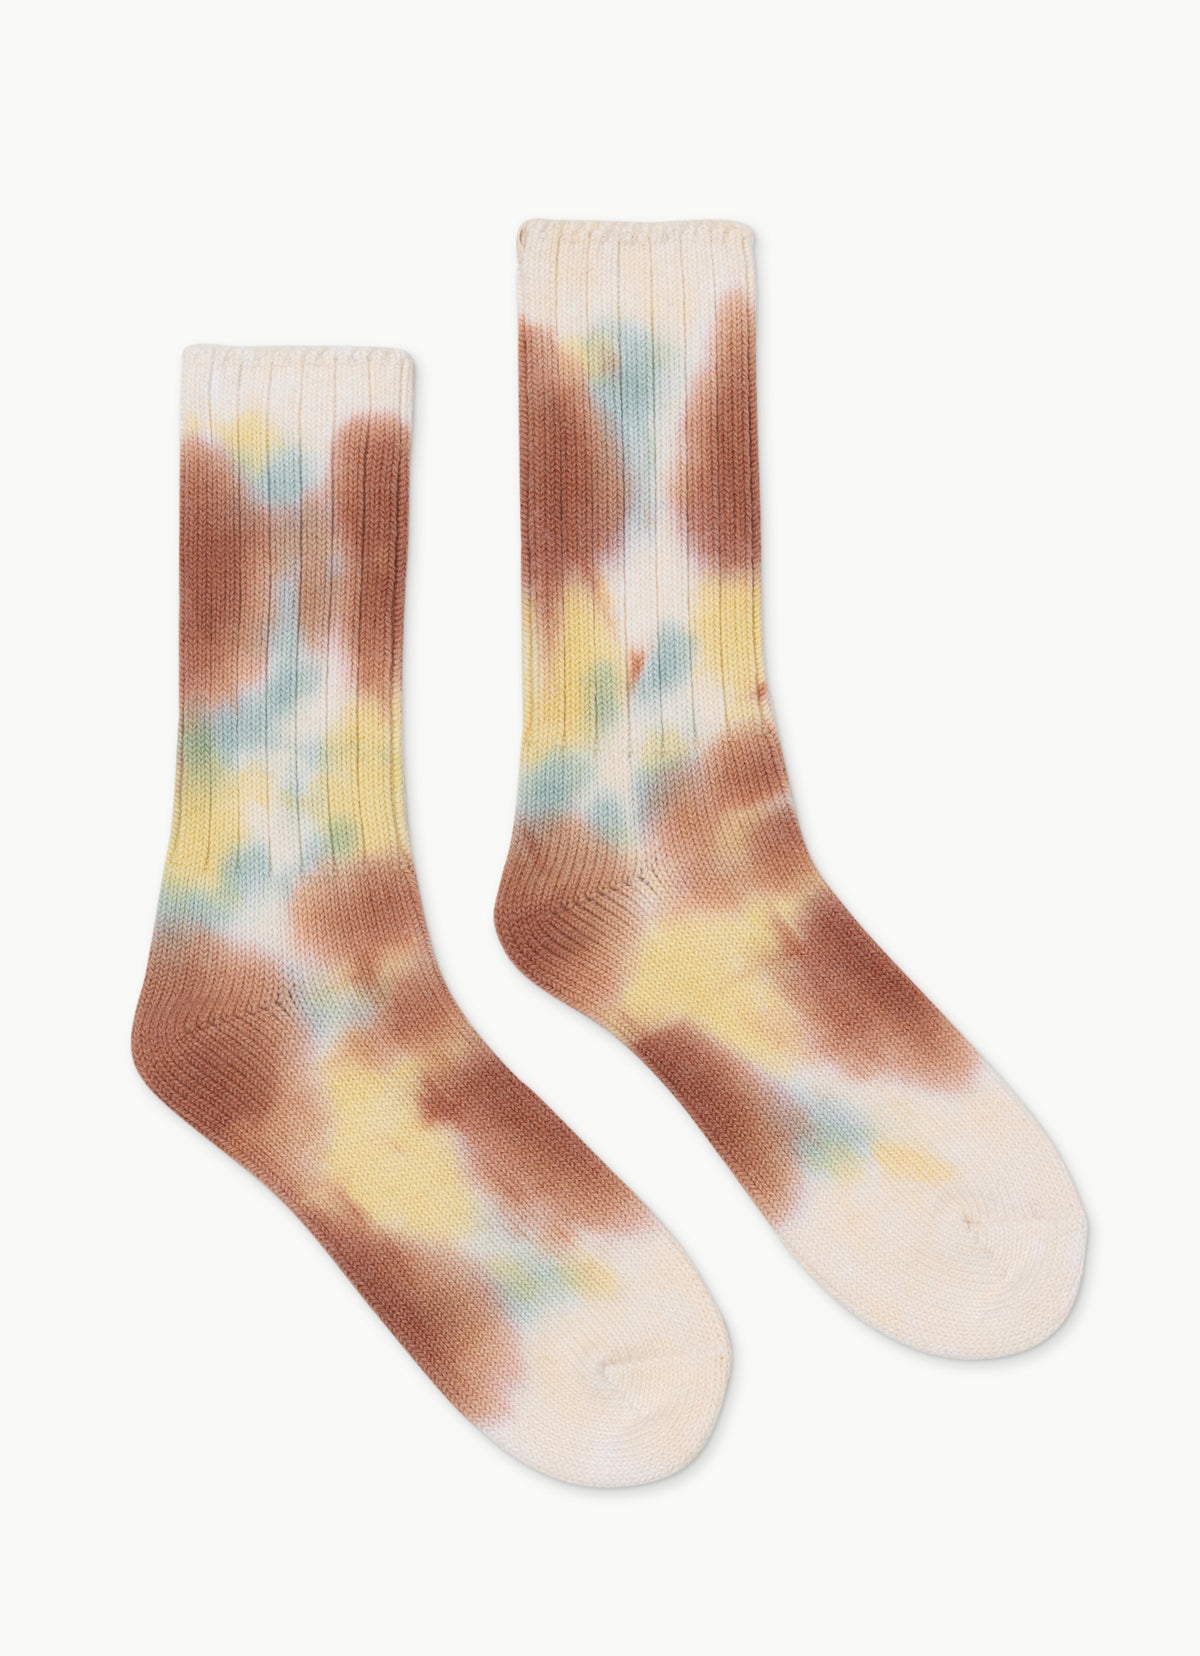 Bulky Rib ankle socks_dyed_Multi